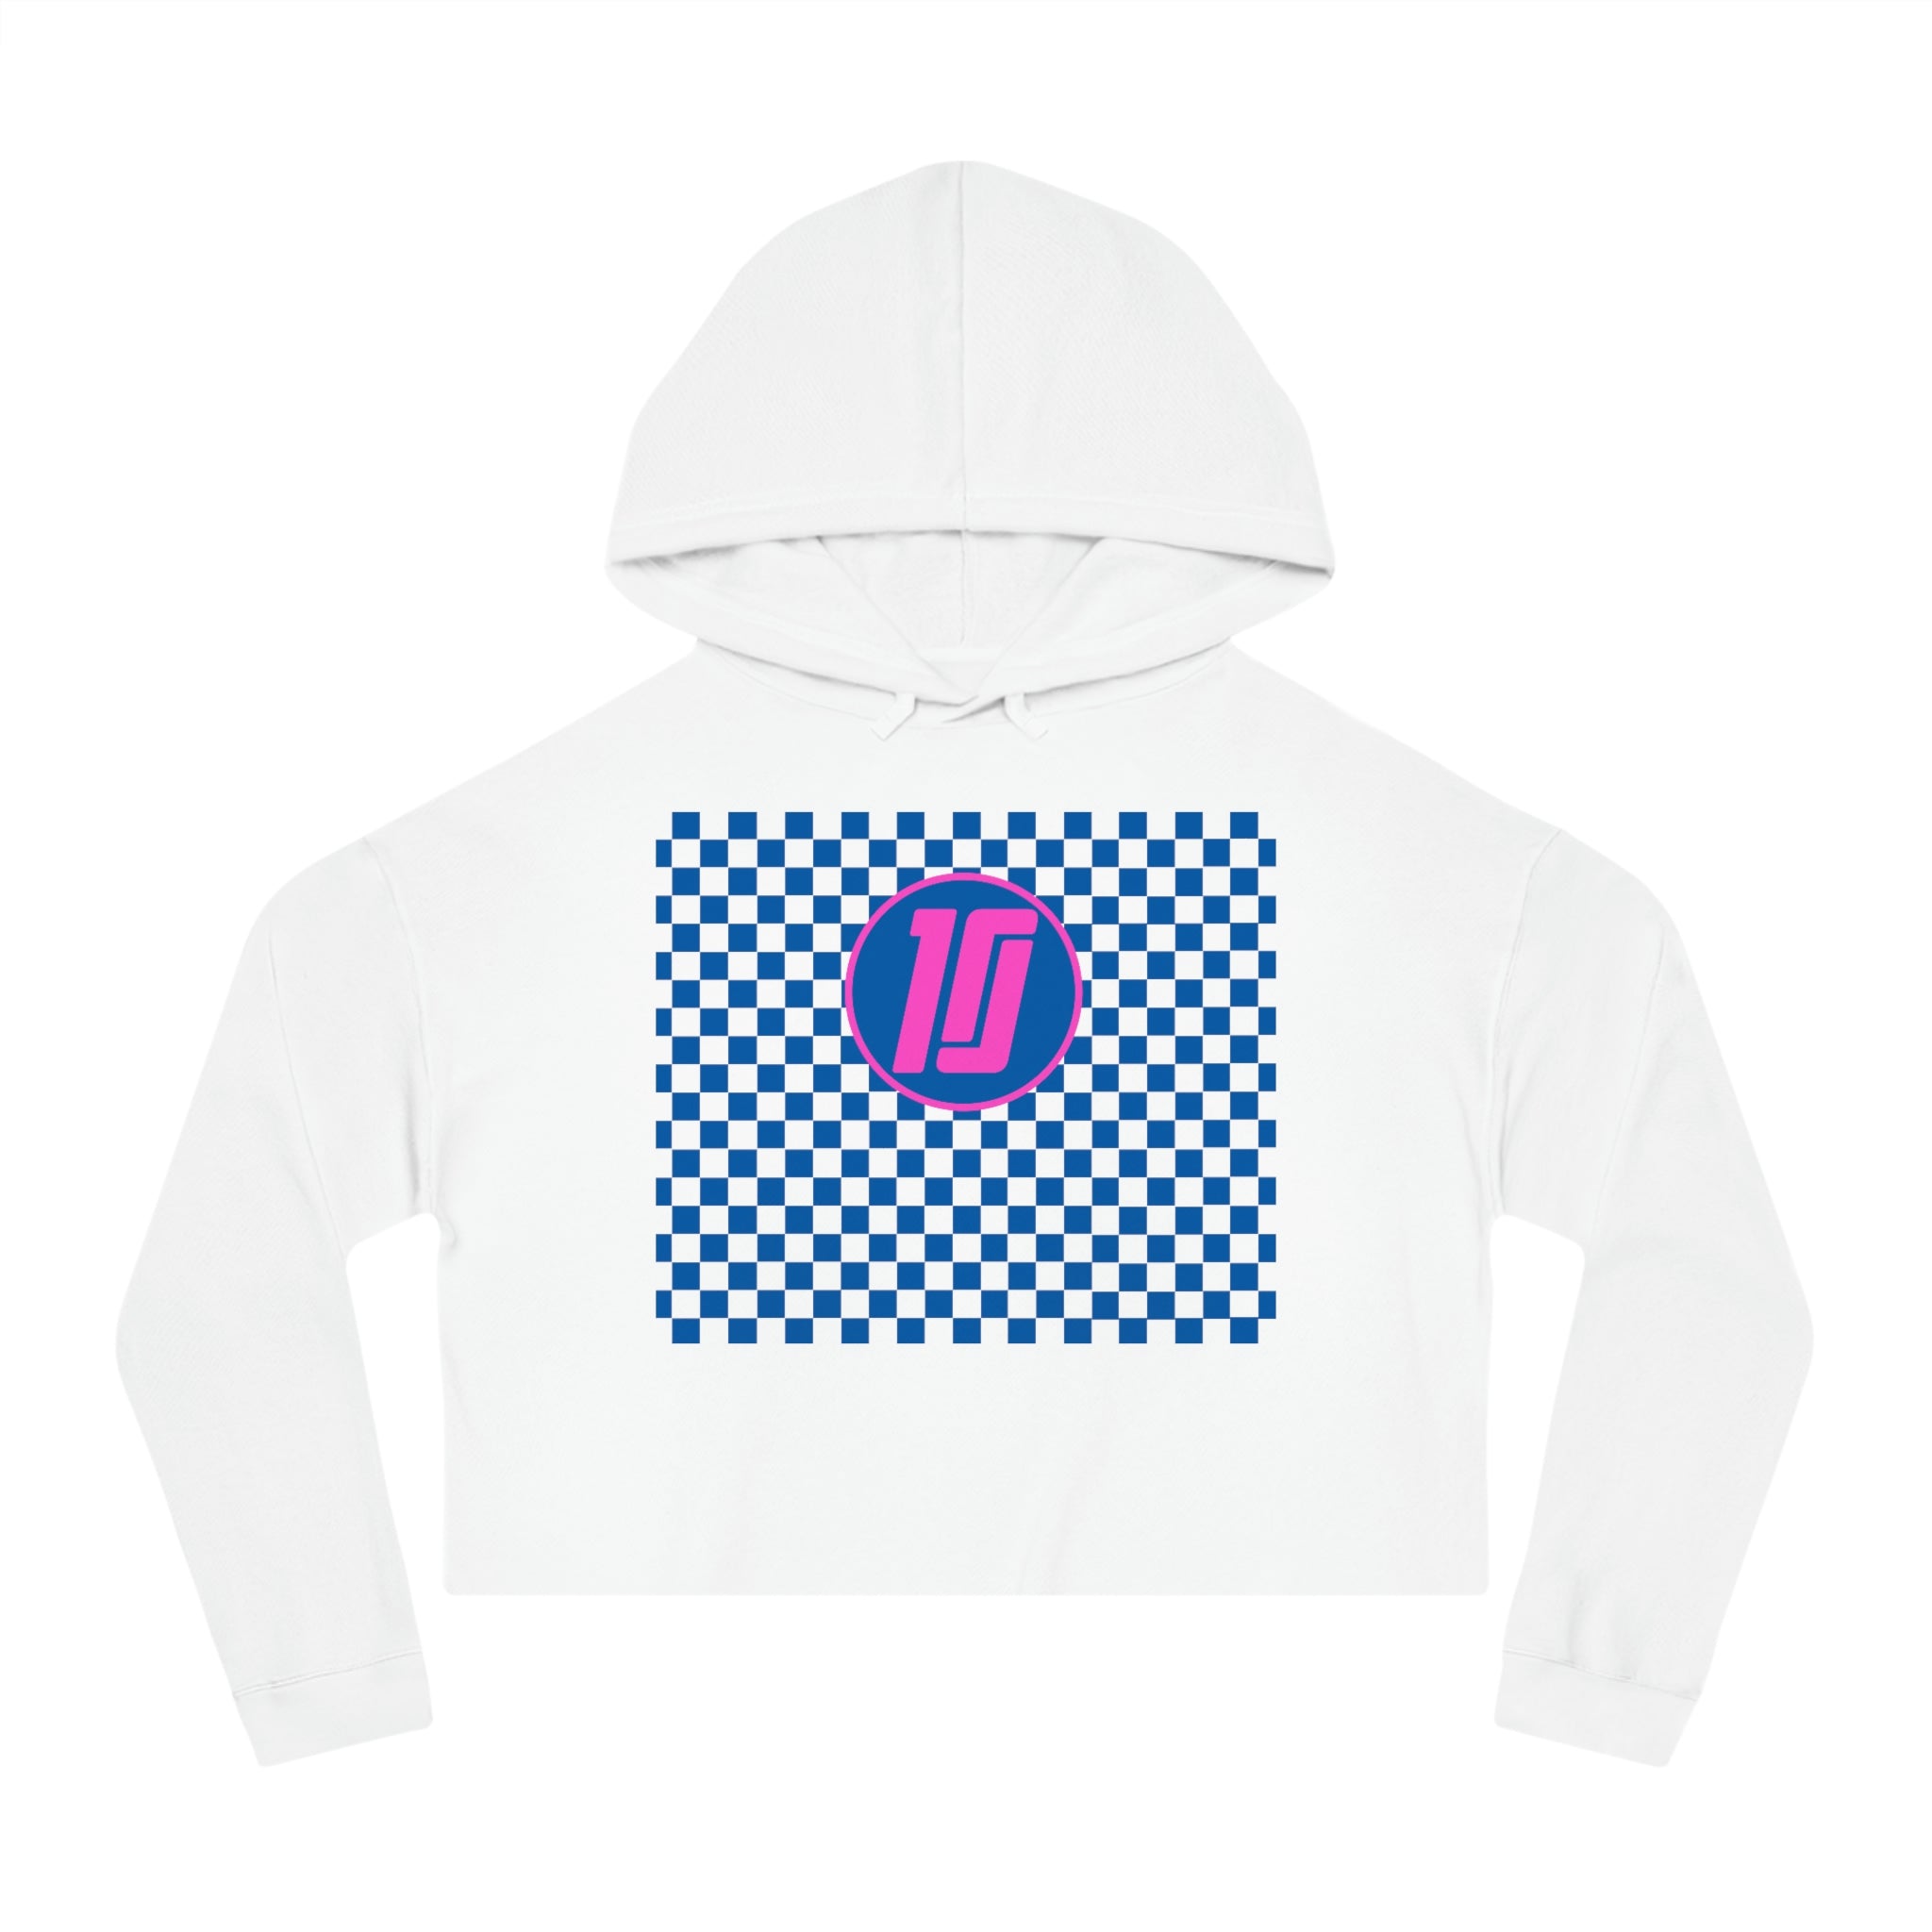 Checkered 10 Women’s Cropped Hooded Sweatshirt - FormulaFanatics